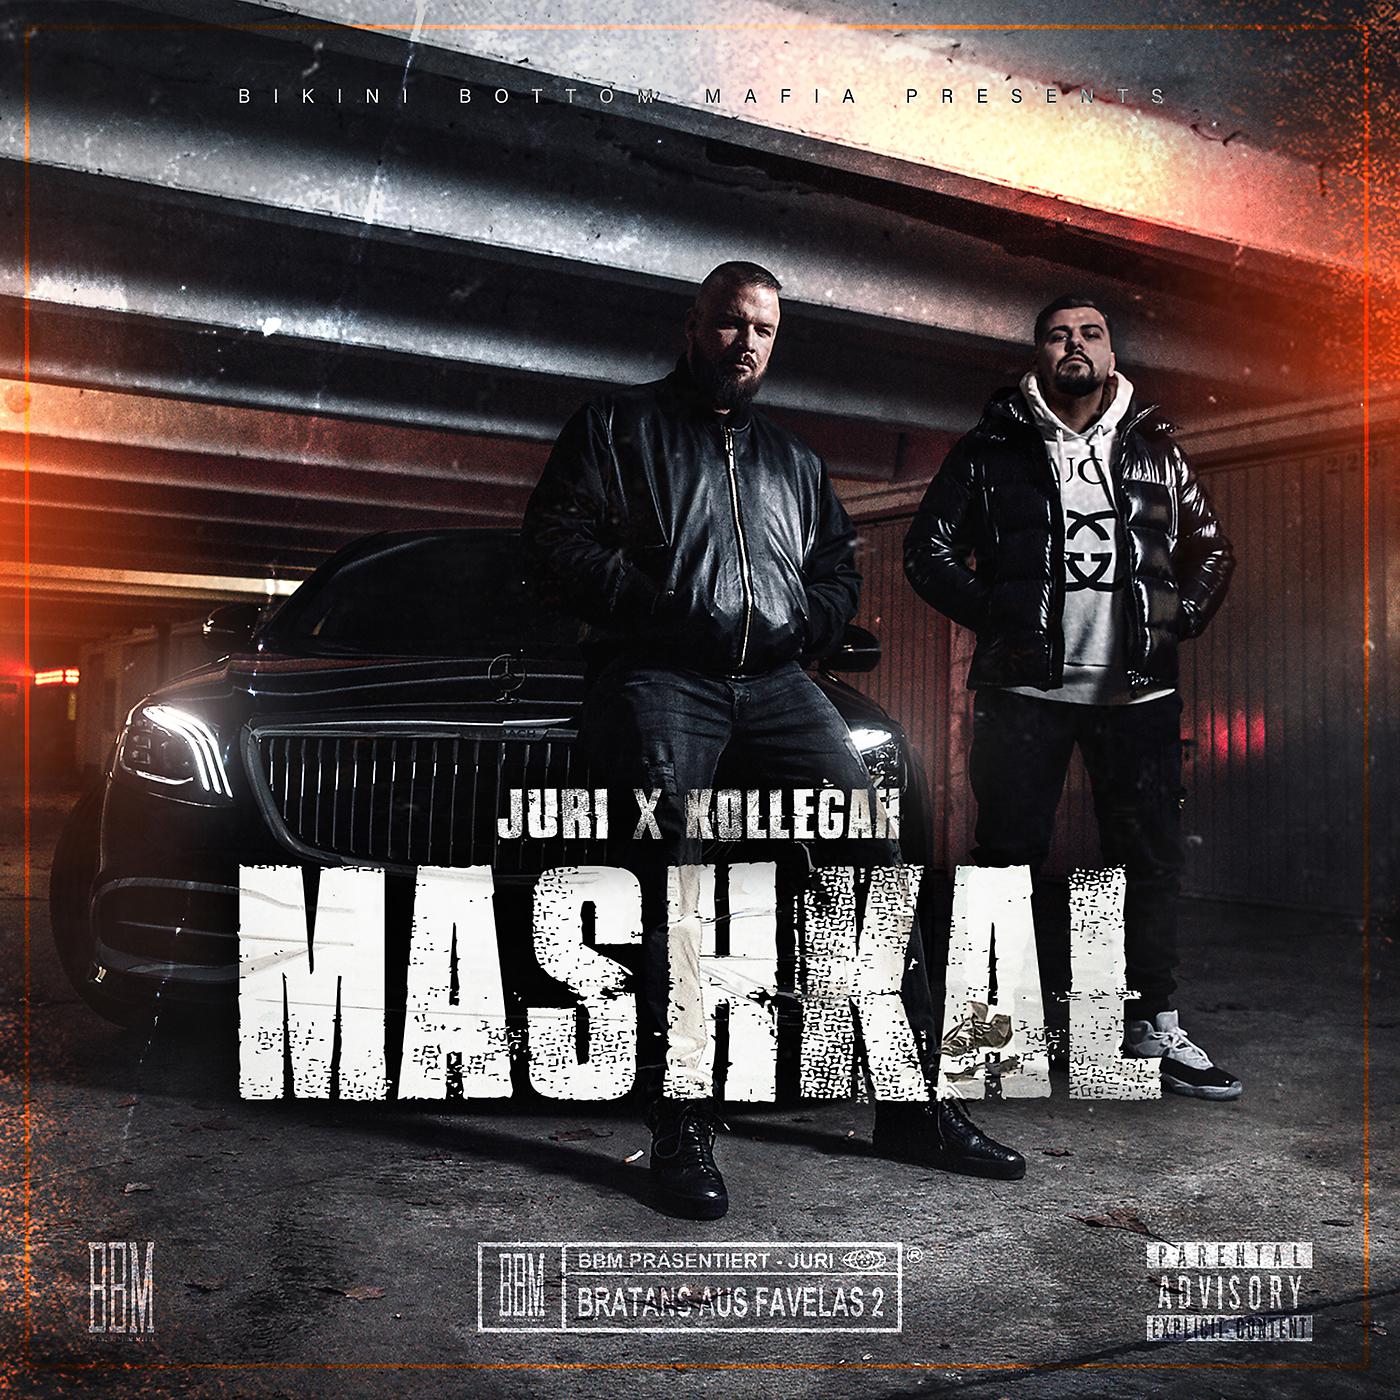 Постер альбома Mashkal